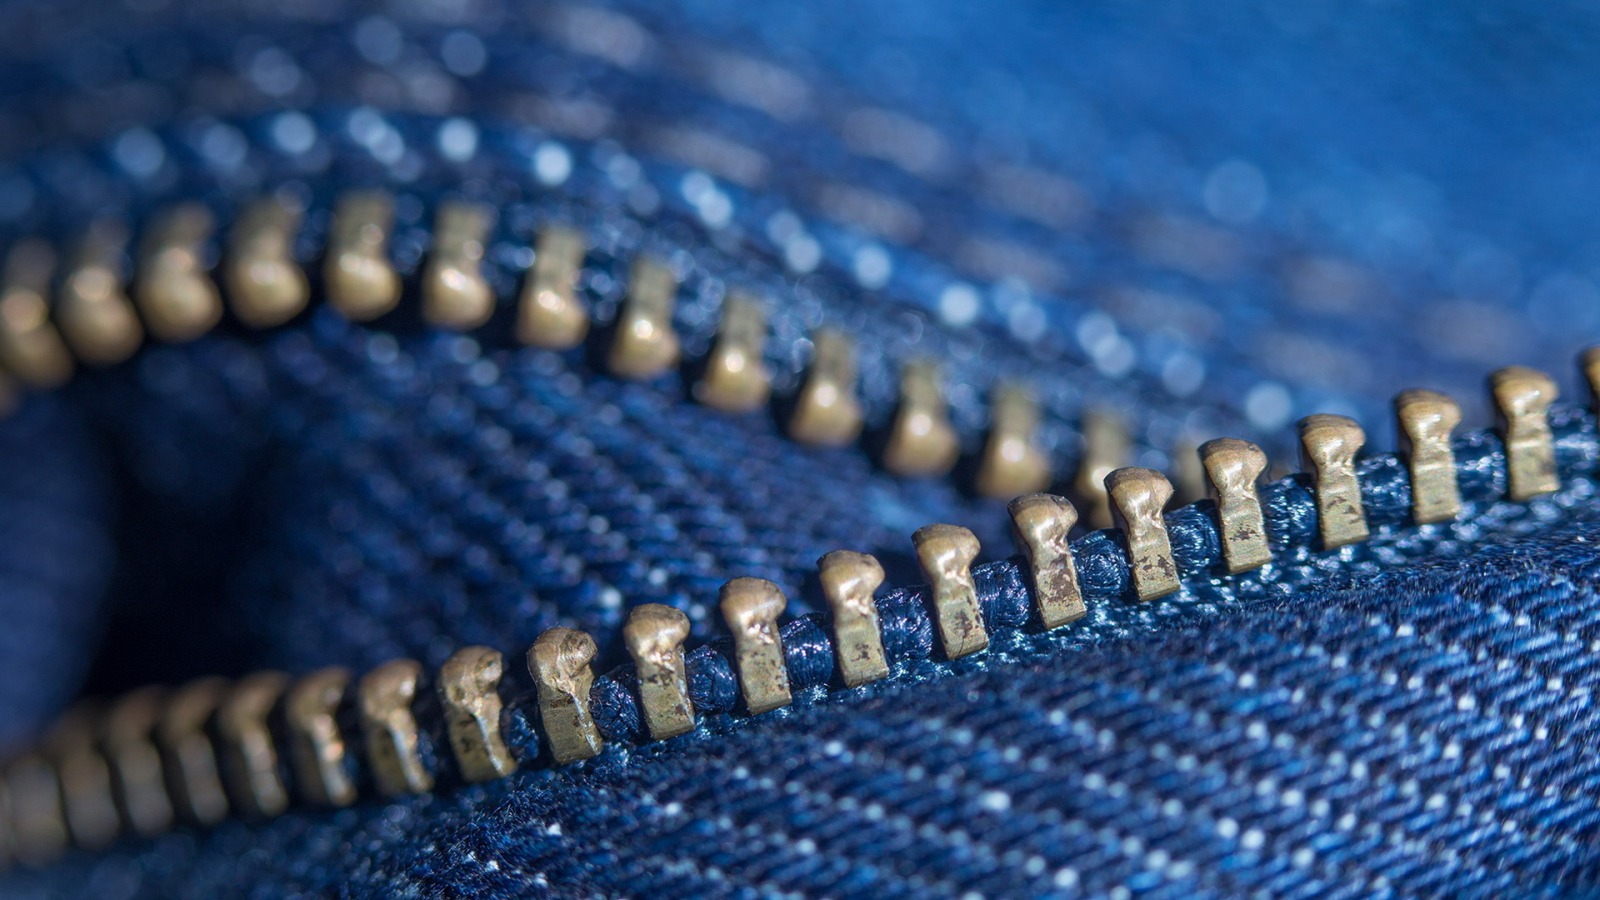 General 1600x900 photography depth of field macro zipper jeans blue